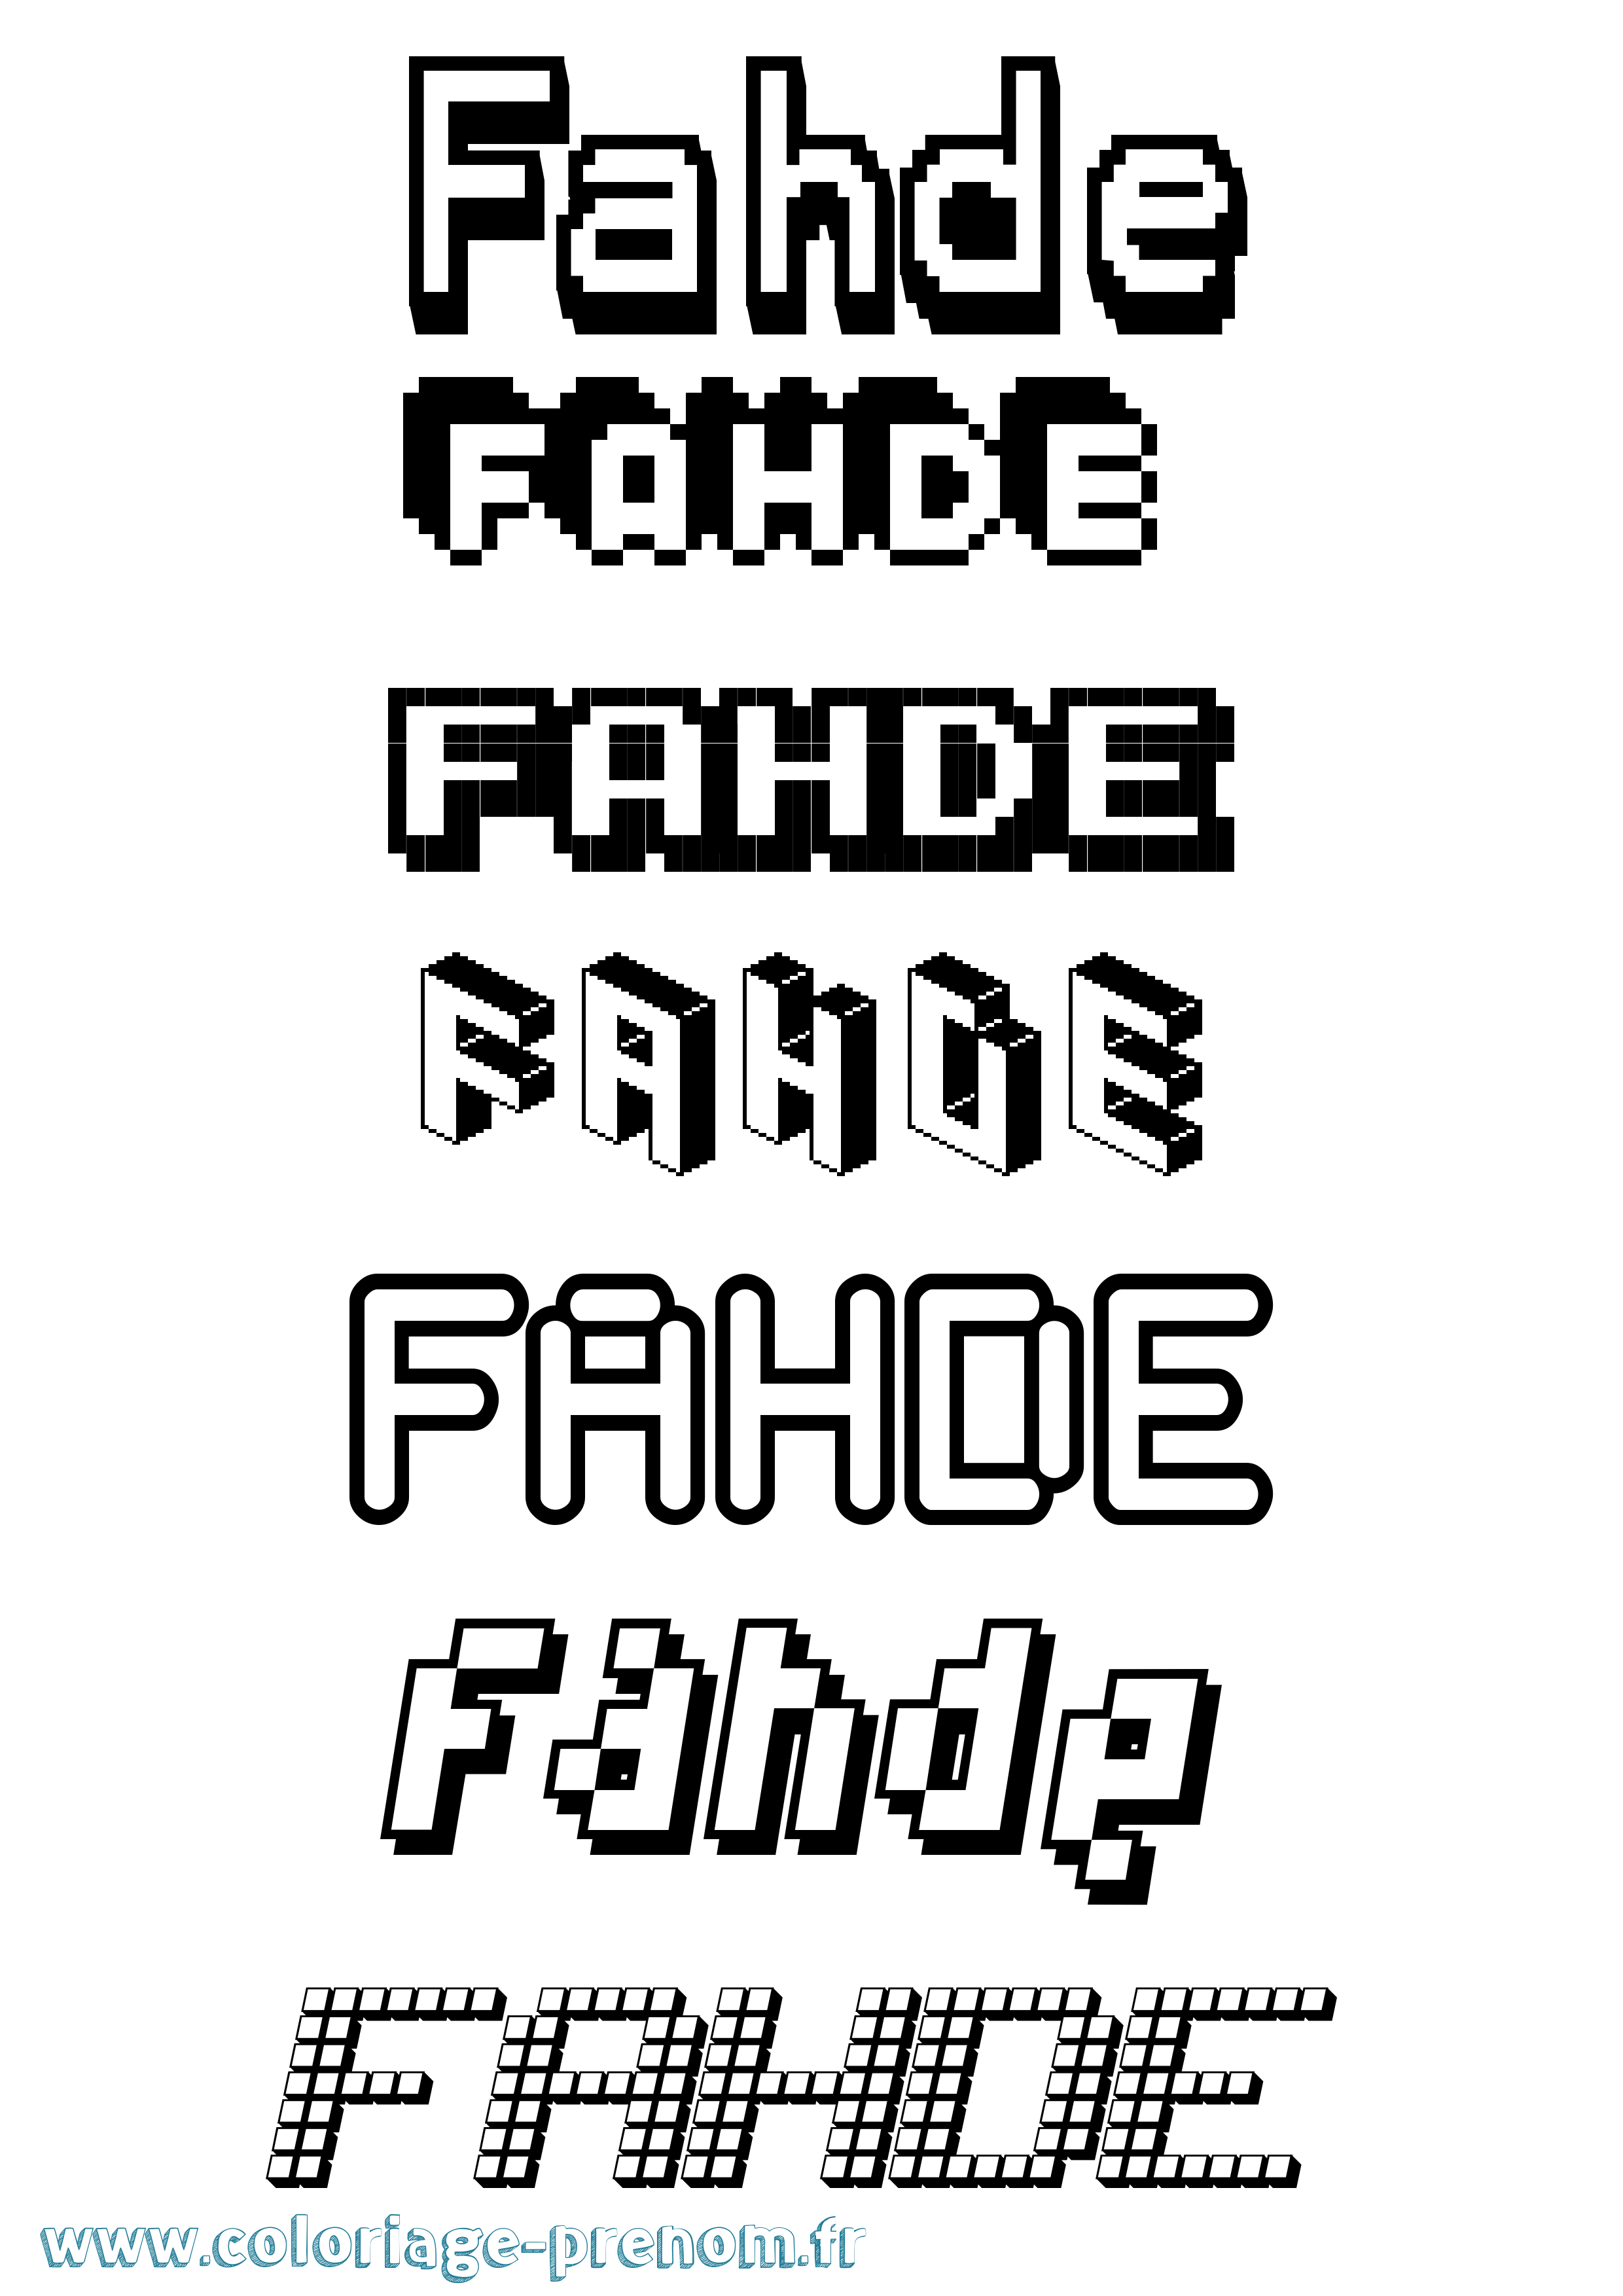 Coloriage prénom Fahde Pixel